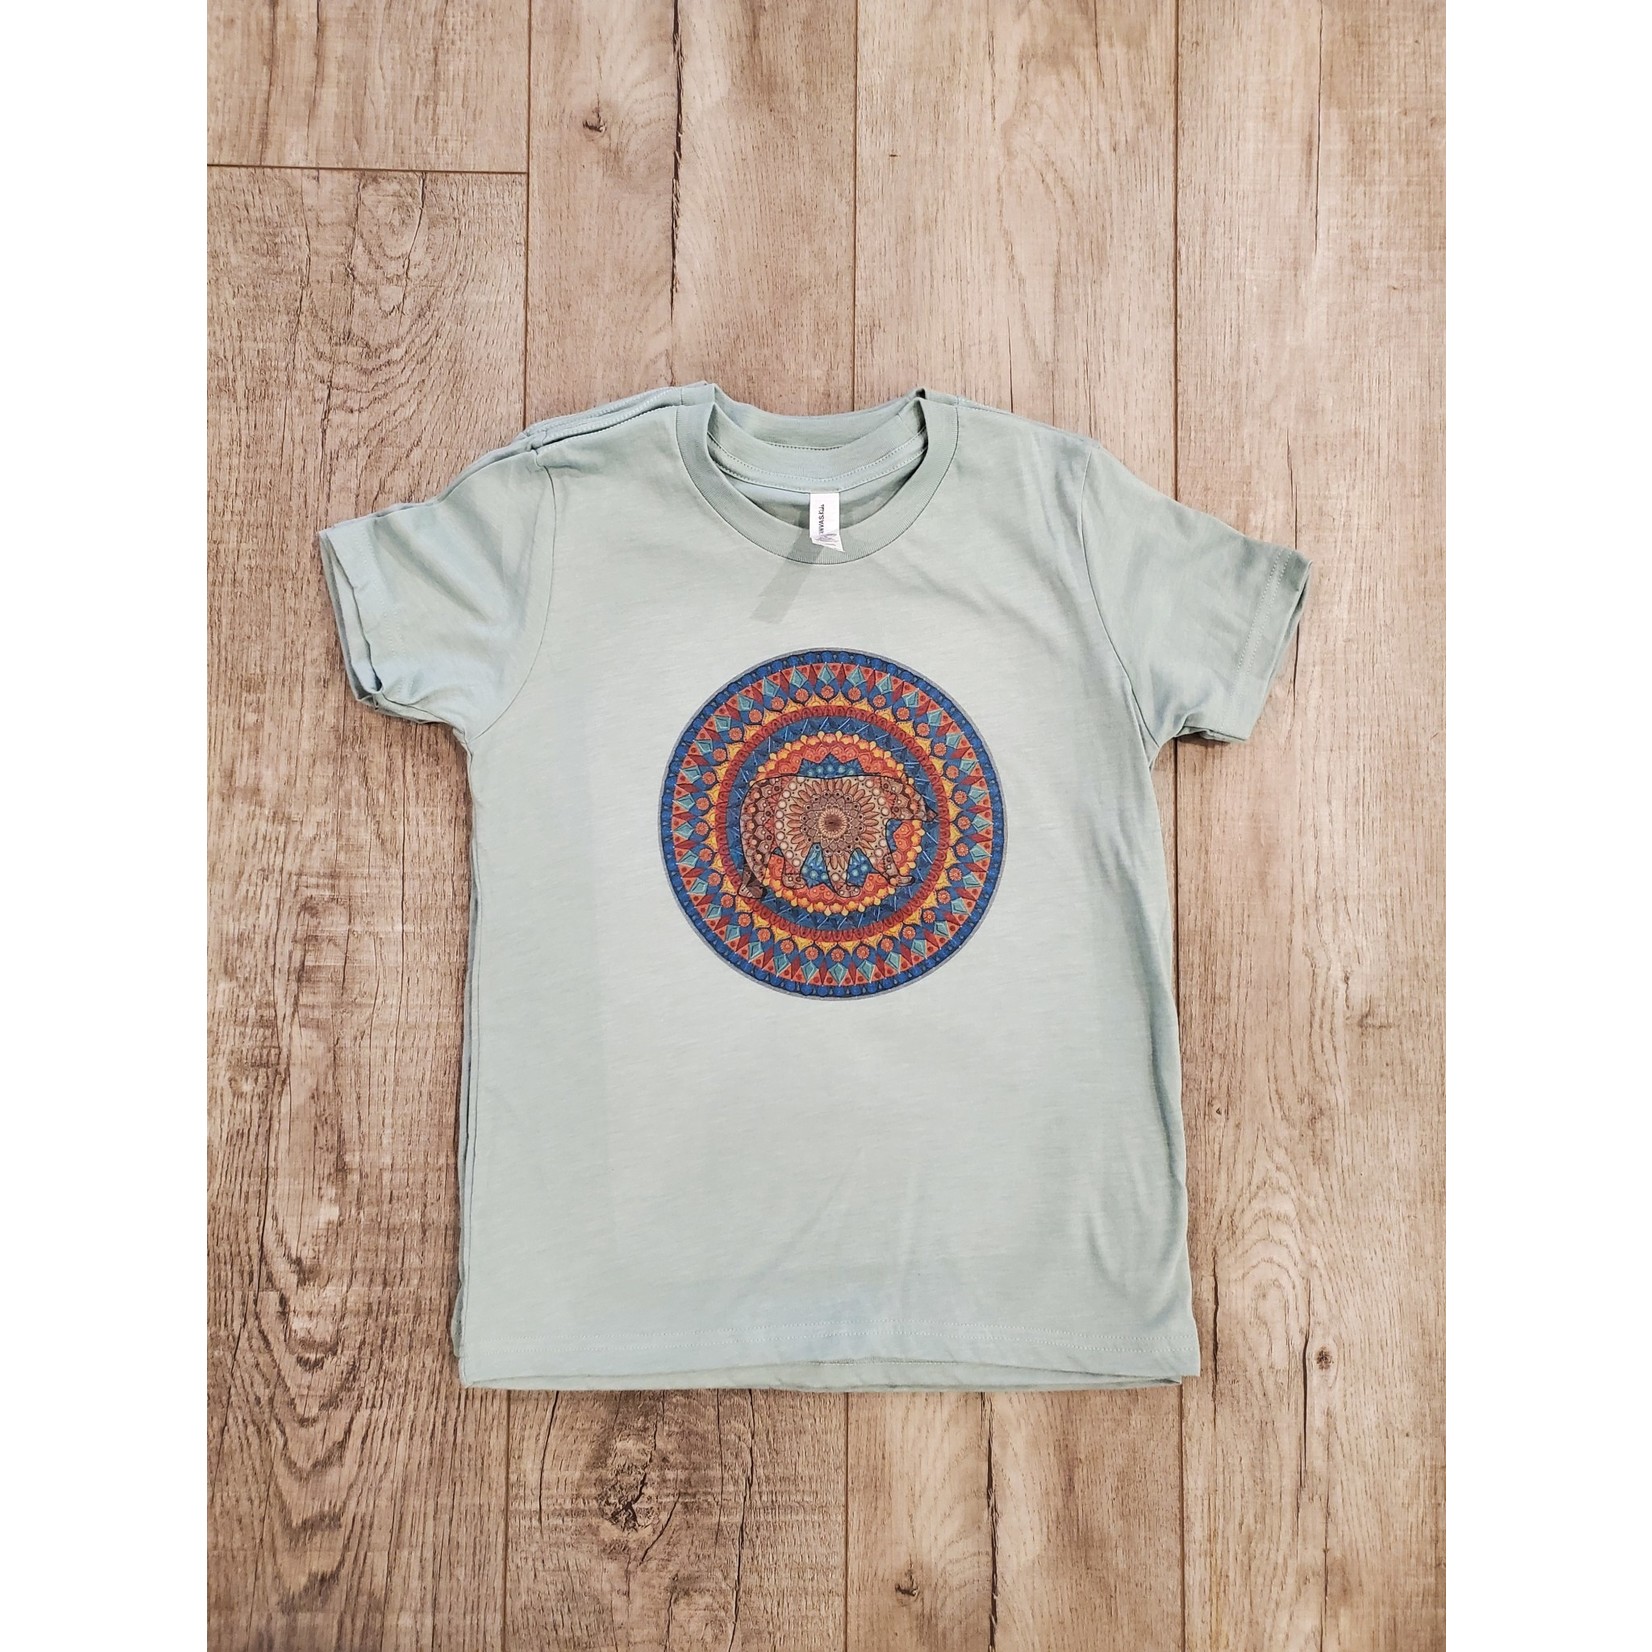 Stirling Studios Kids T-Shirt - Bear Mandala - Dusty Blue